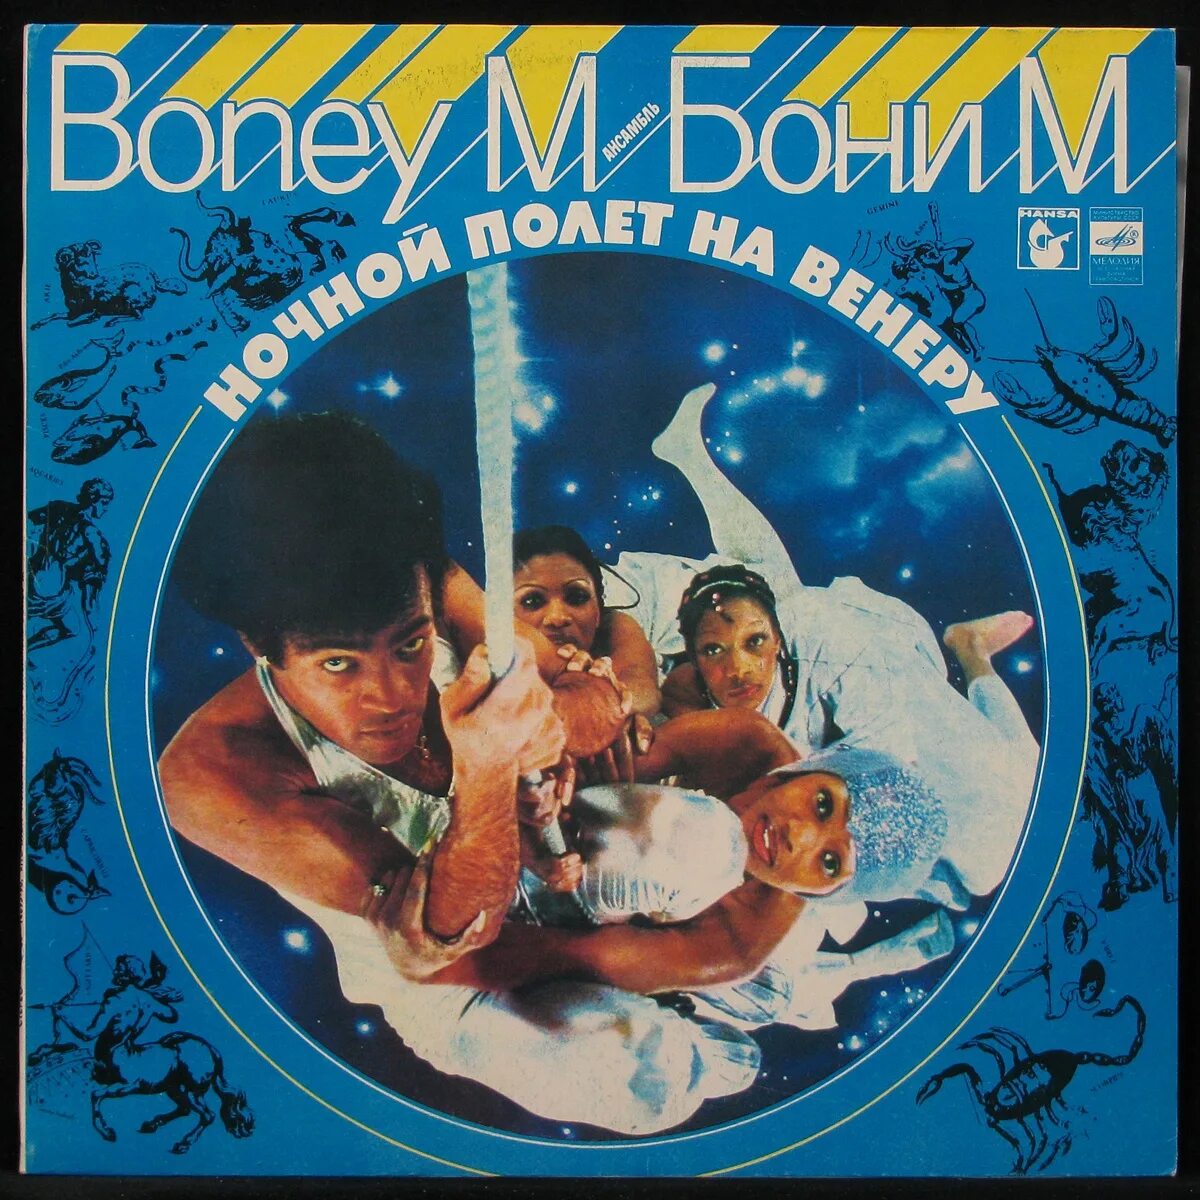 Boney m Venus Nightflight LP. Boney m Nightflight to Venus 1978 пластинки. Boney m пластинка. Бони м. ночной полет на Венеру ("мелодия", с60-14895-96] 1980) обложка. Boney m nightflight